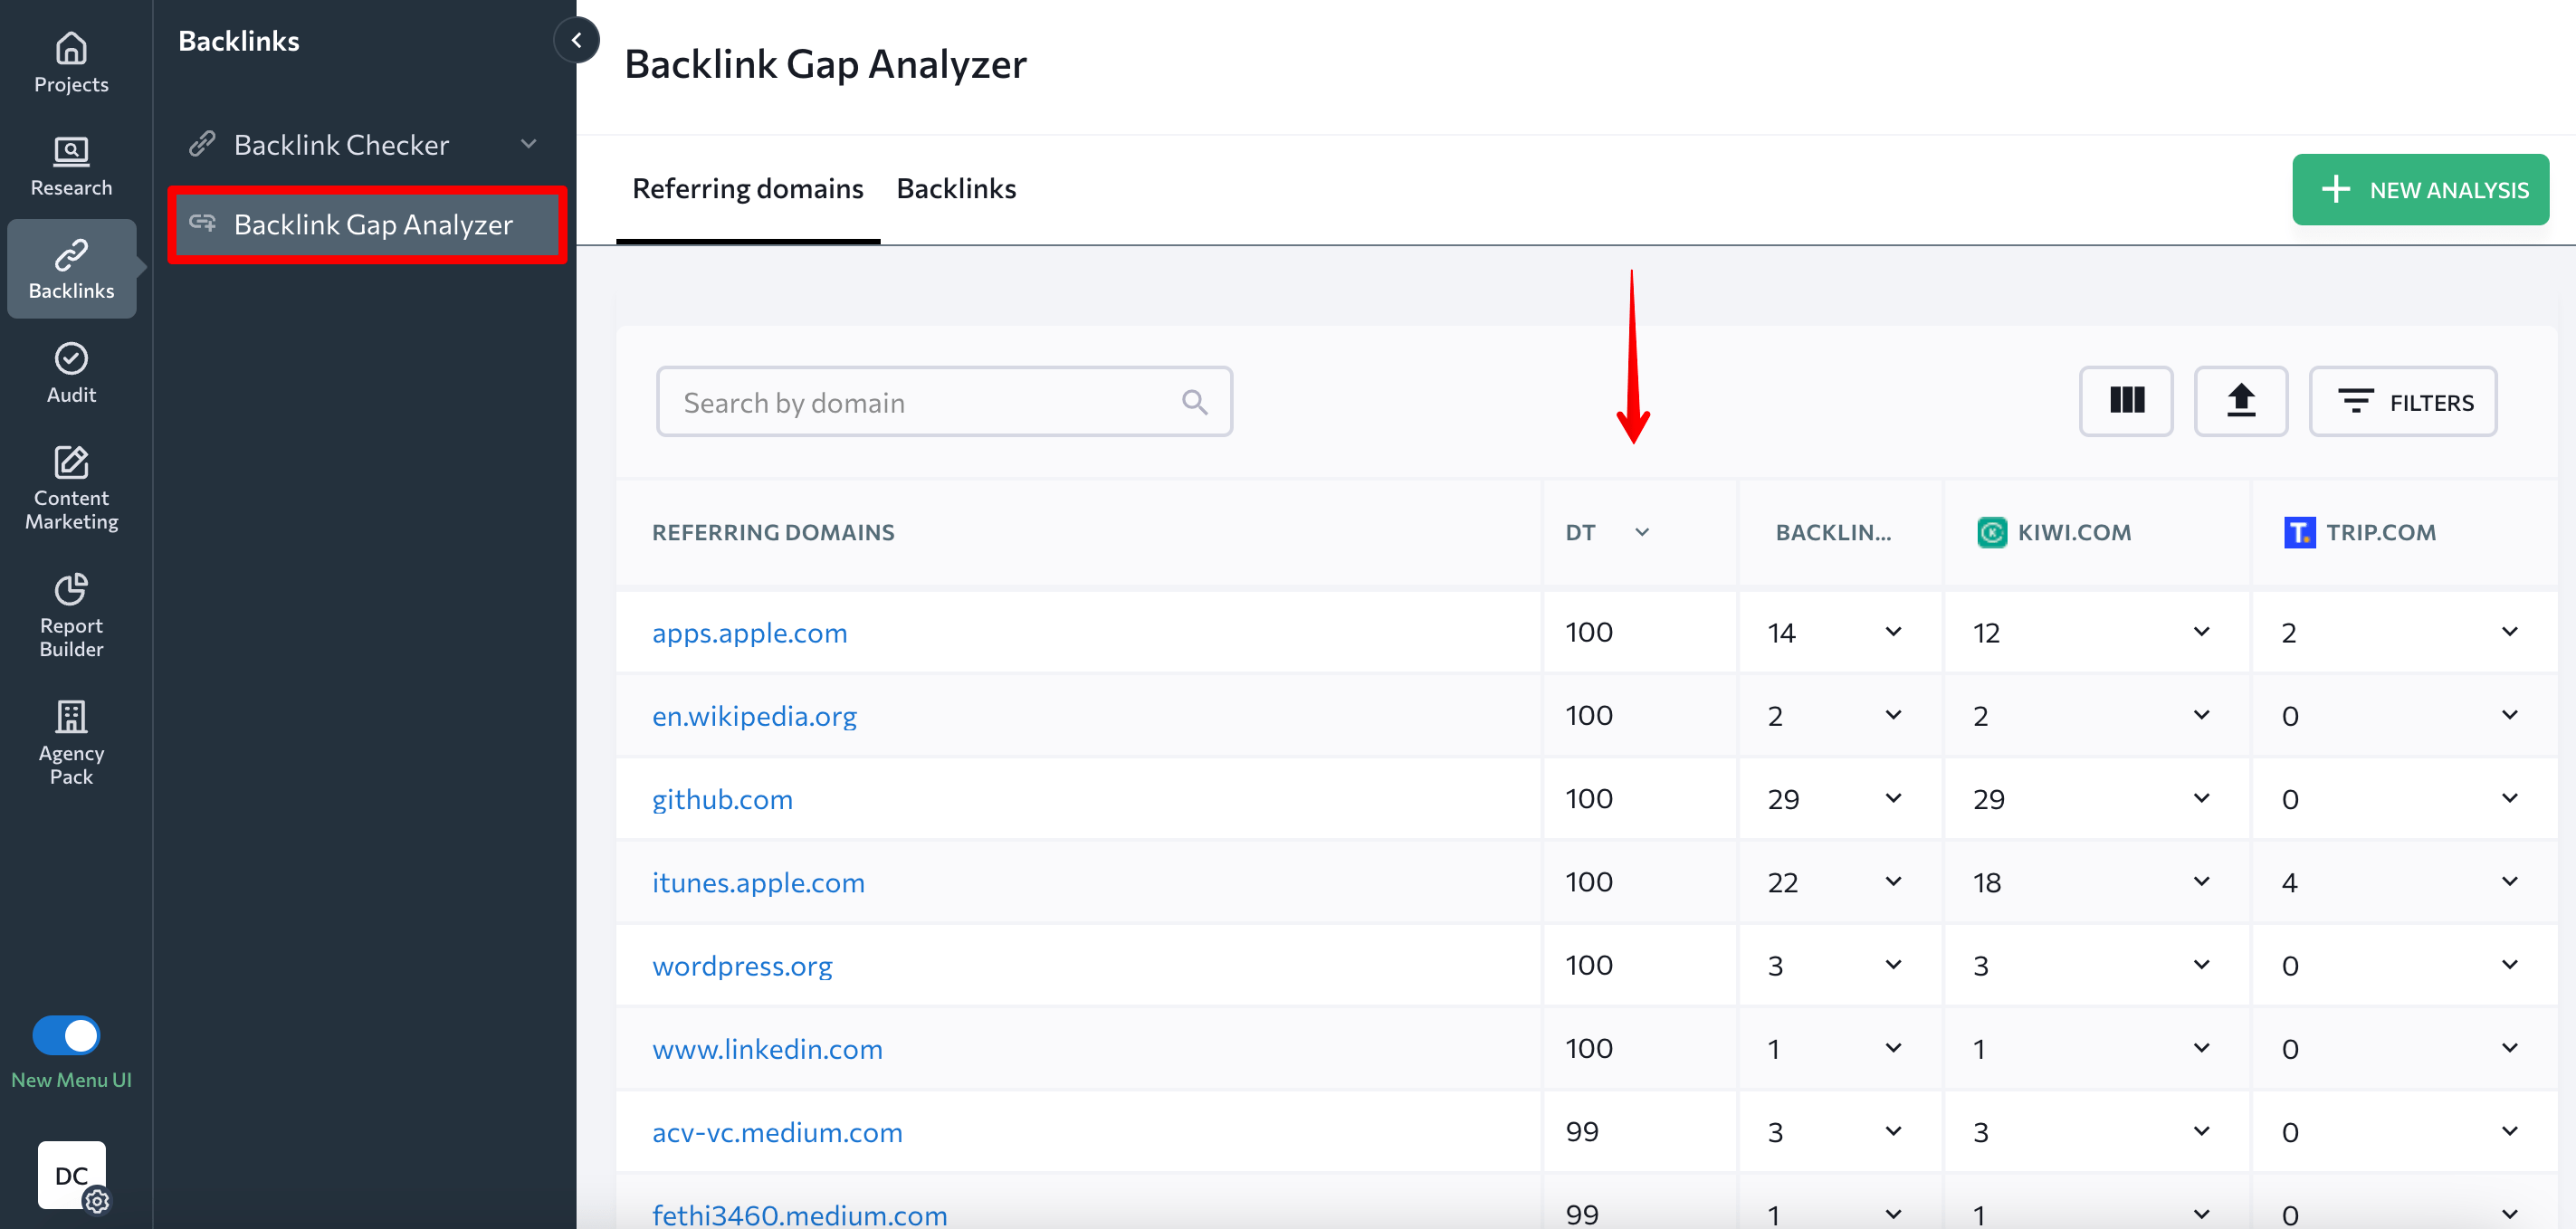 SE Ranking’s Backlink Gap Analyzer